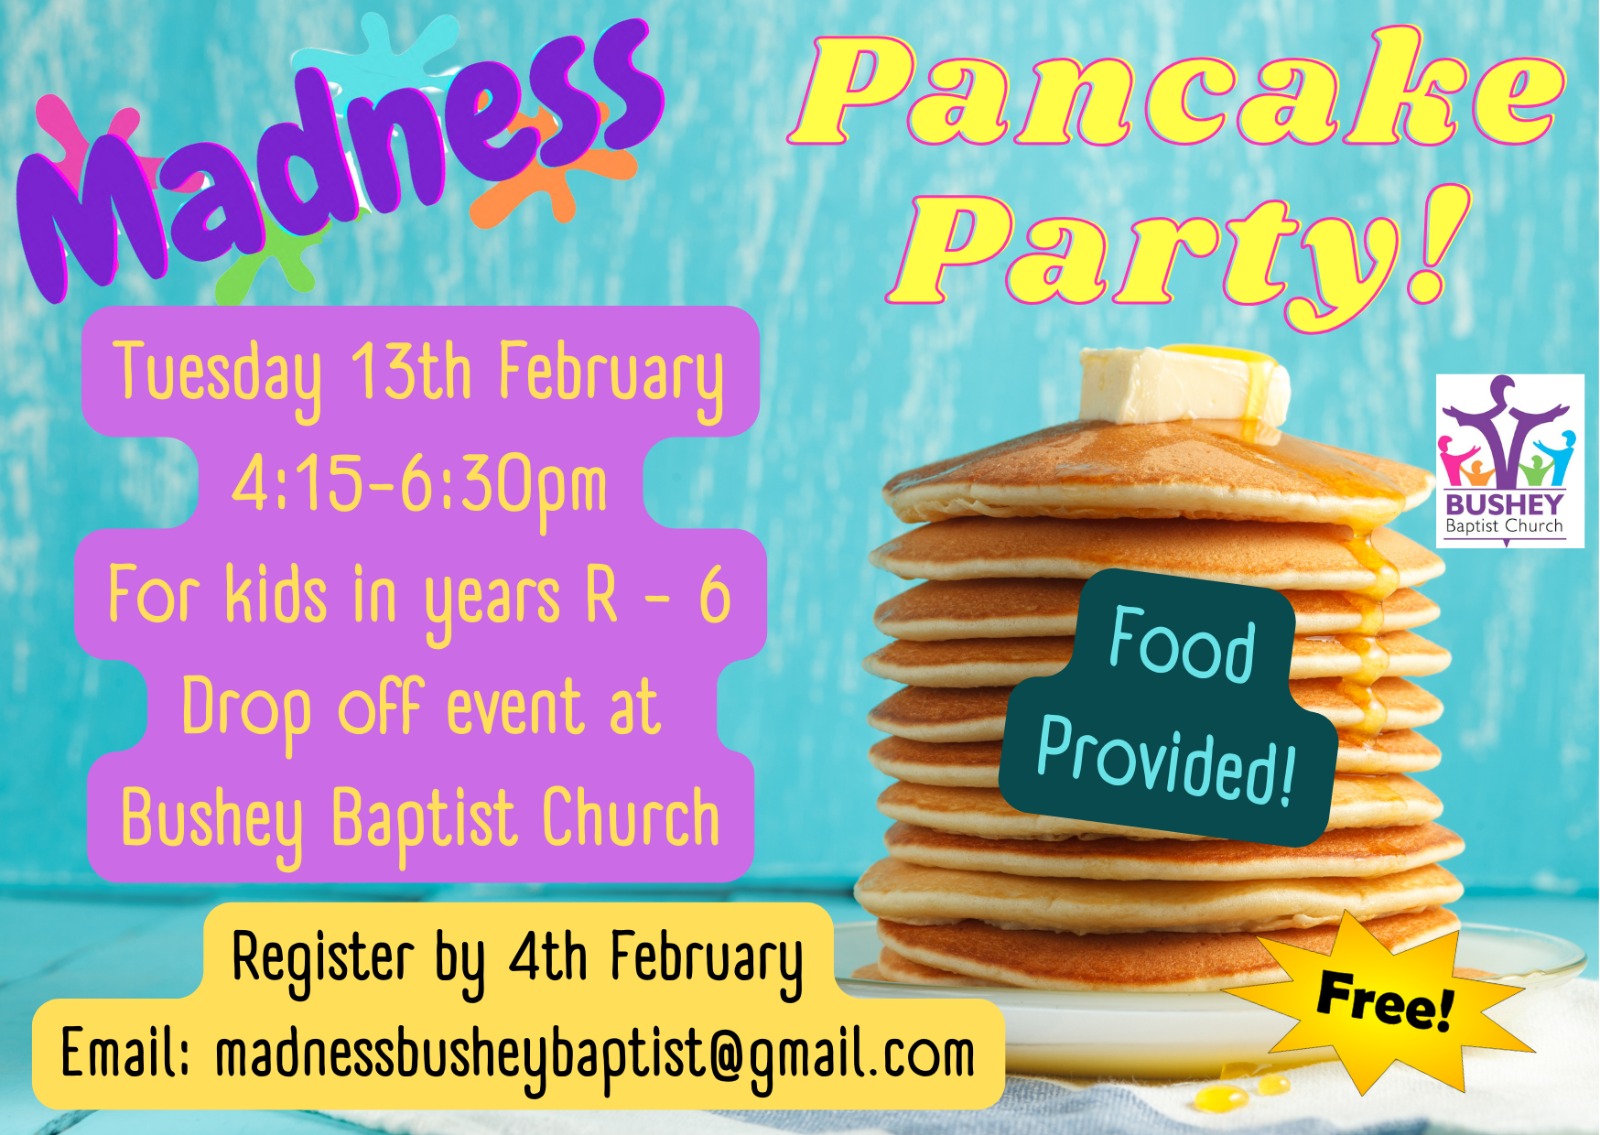 Madness Pancake Party!